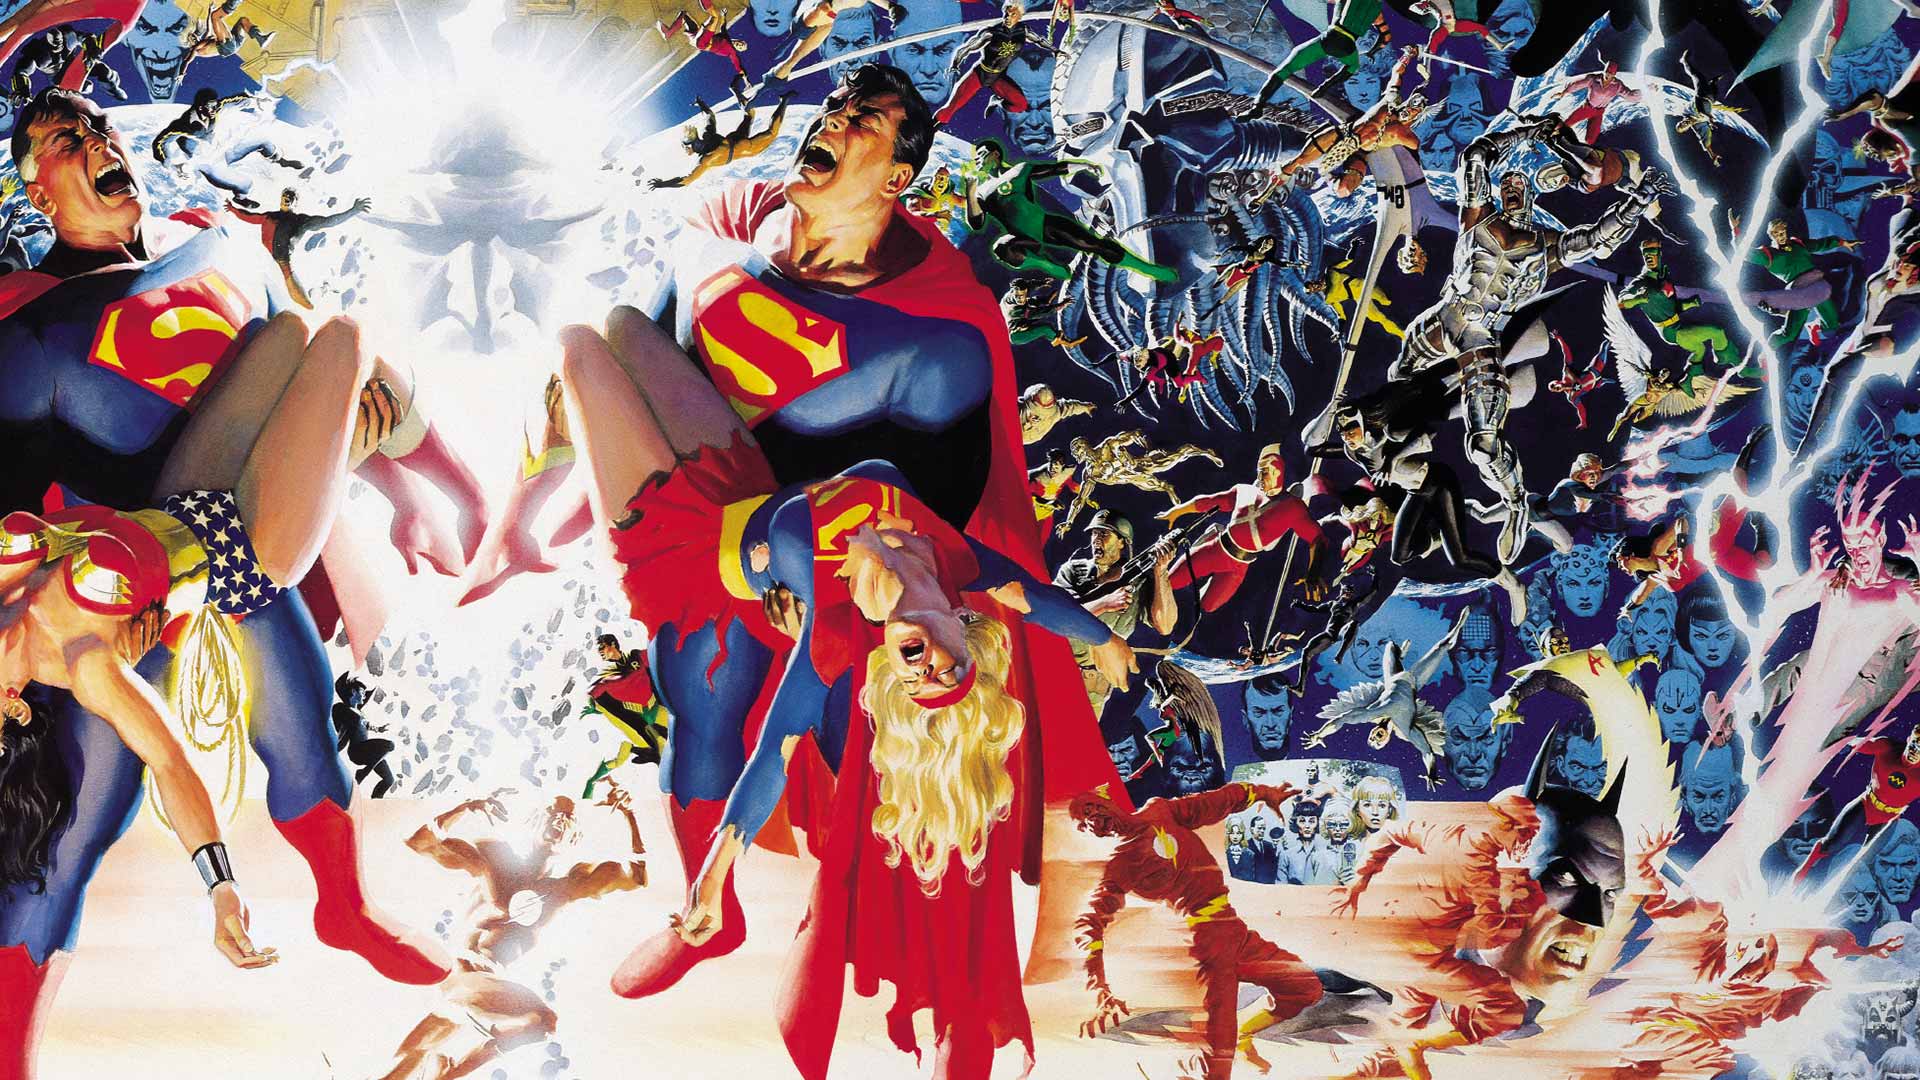 Slideshow: A History of DC's Crisis Comics